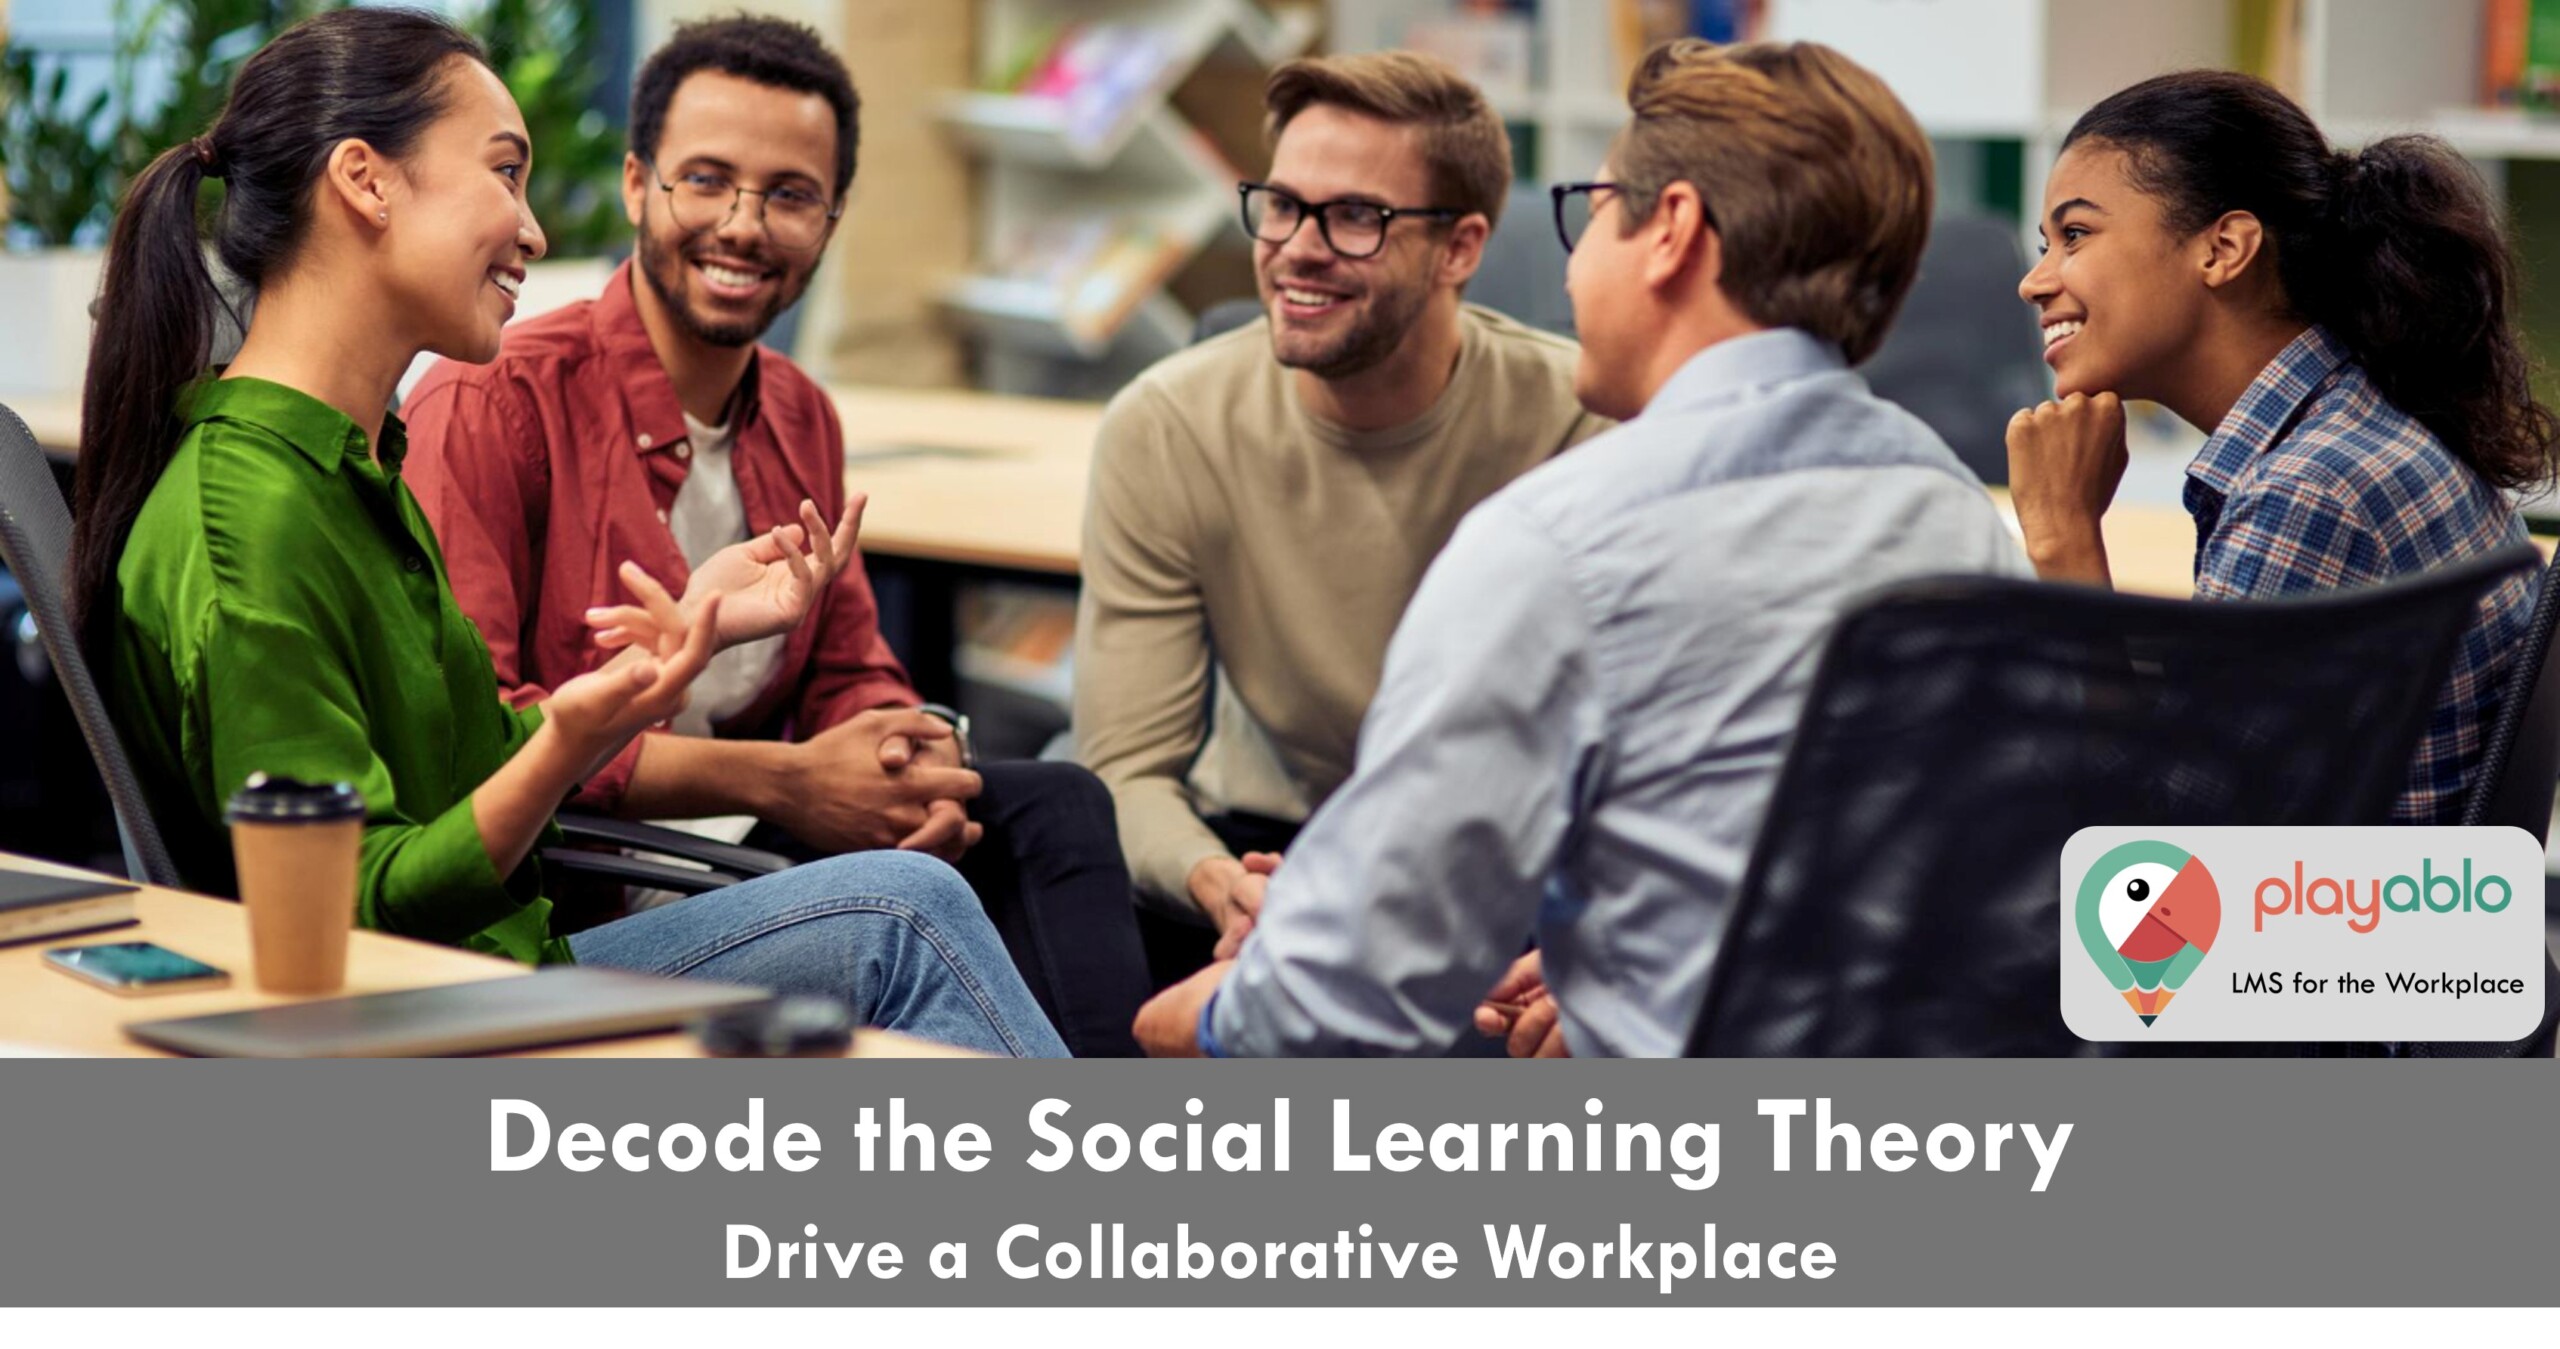 social-learning-theory